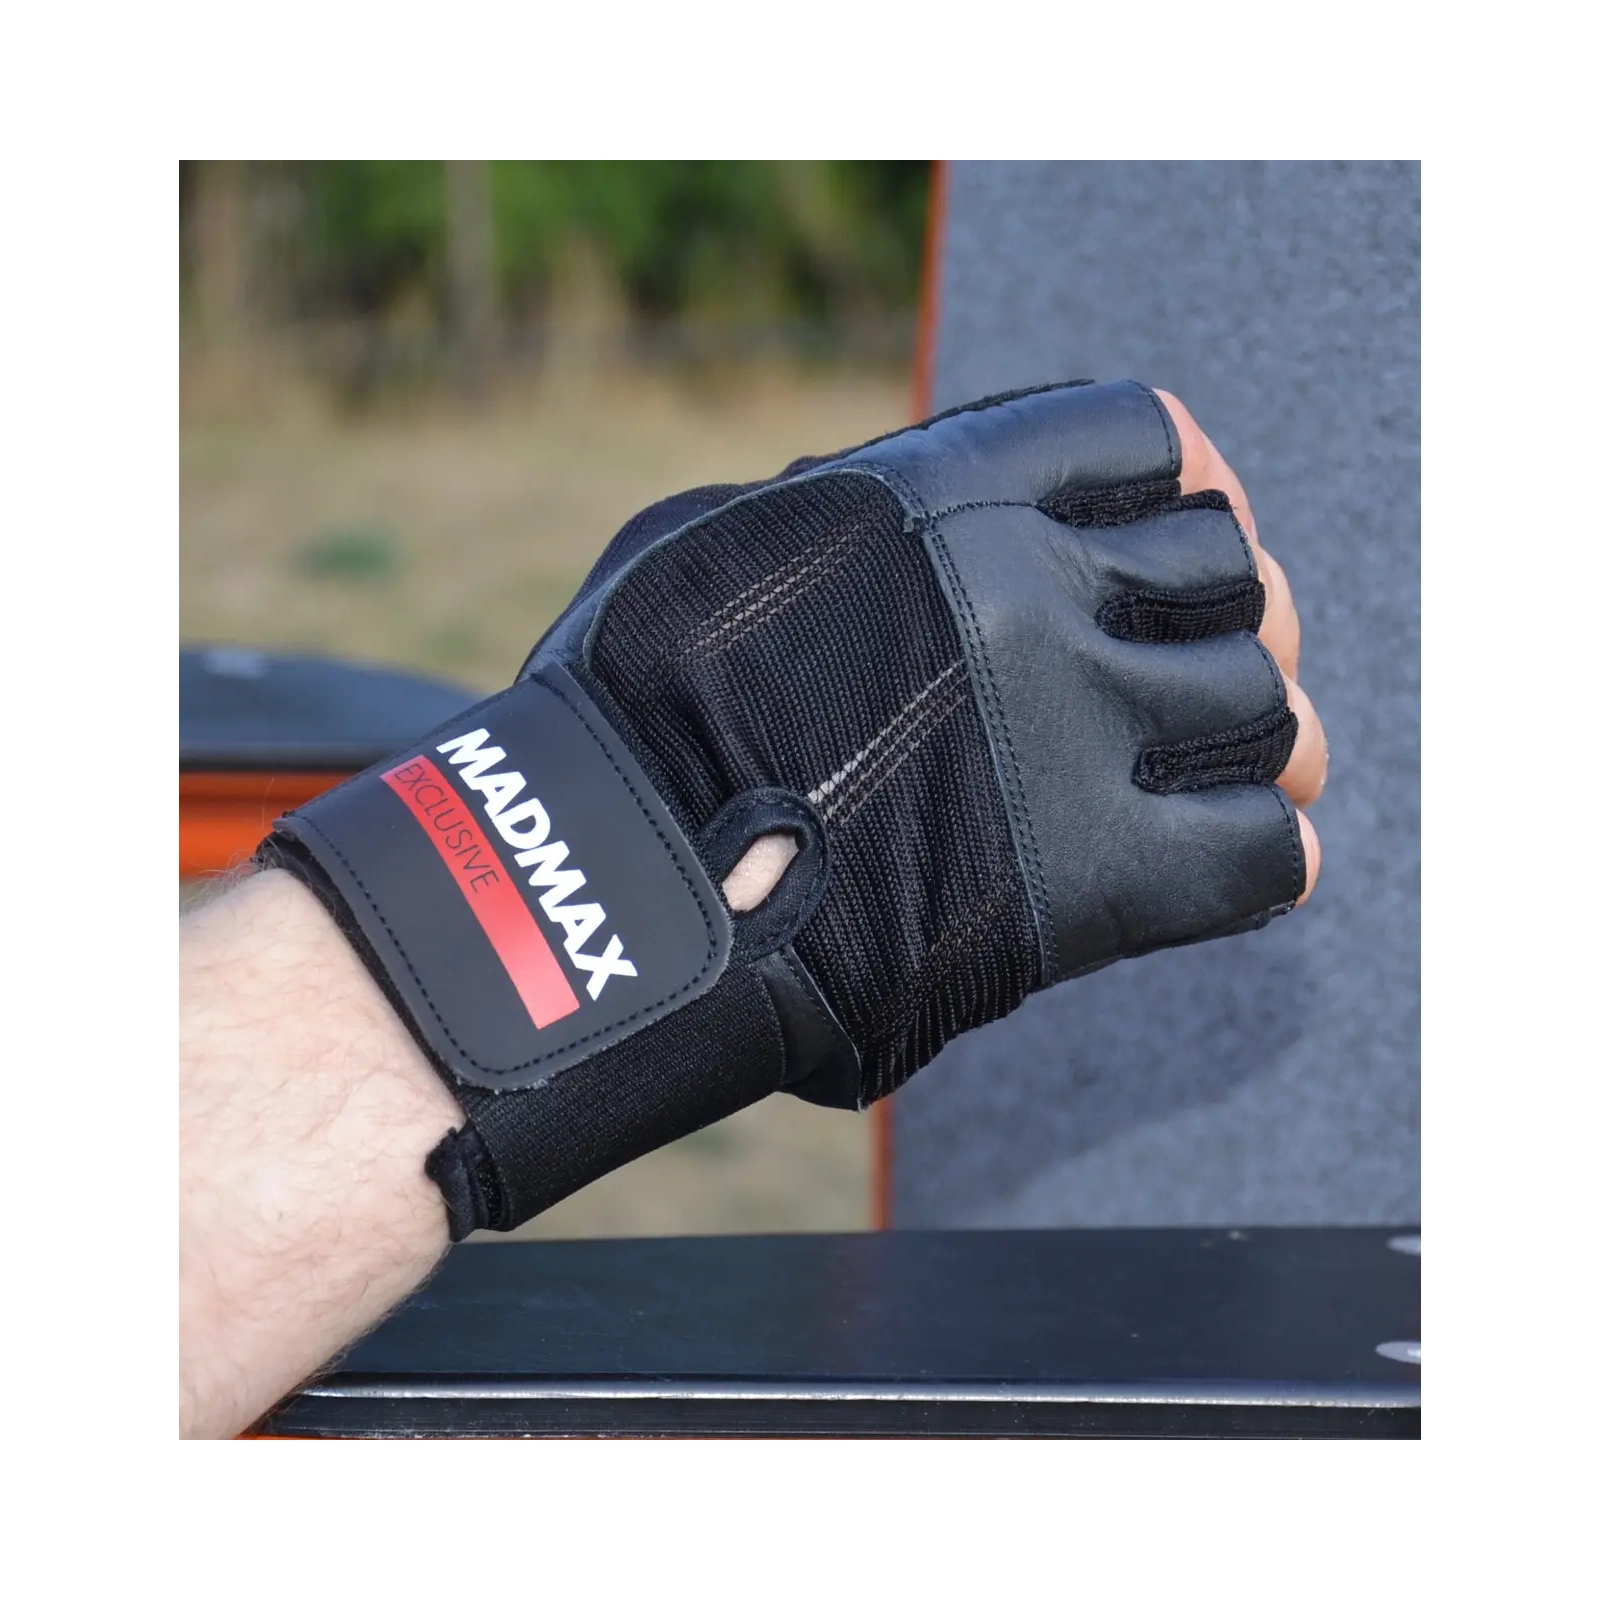 Перчатки для фитнеса MadMax MFG-269 Professional White L (MFG-269-White_L) изображение 2